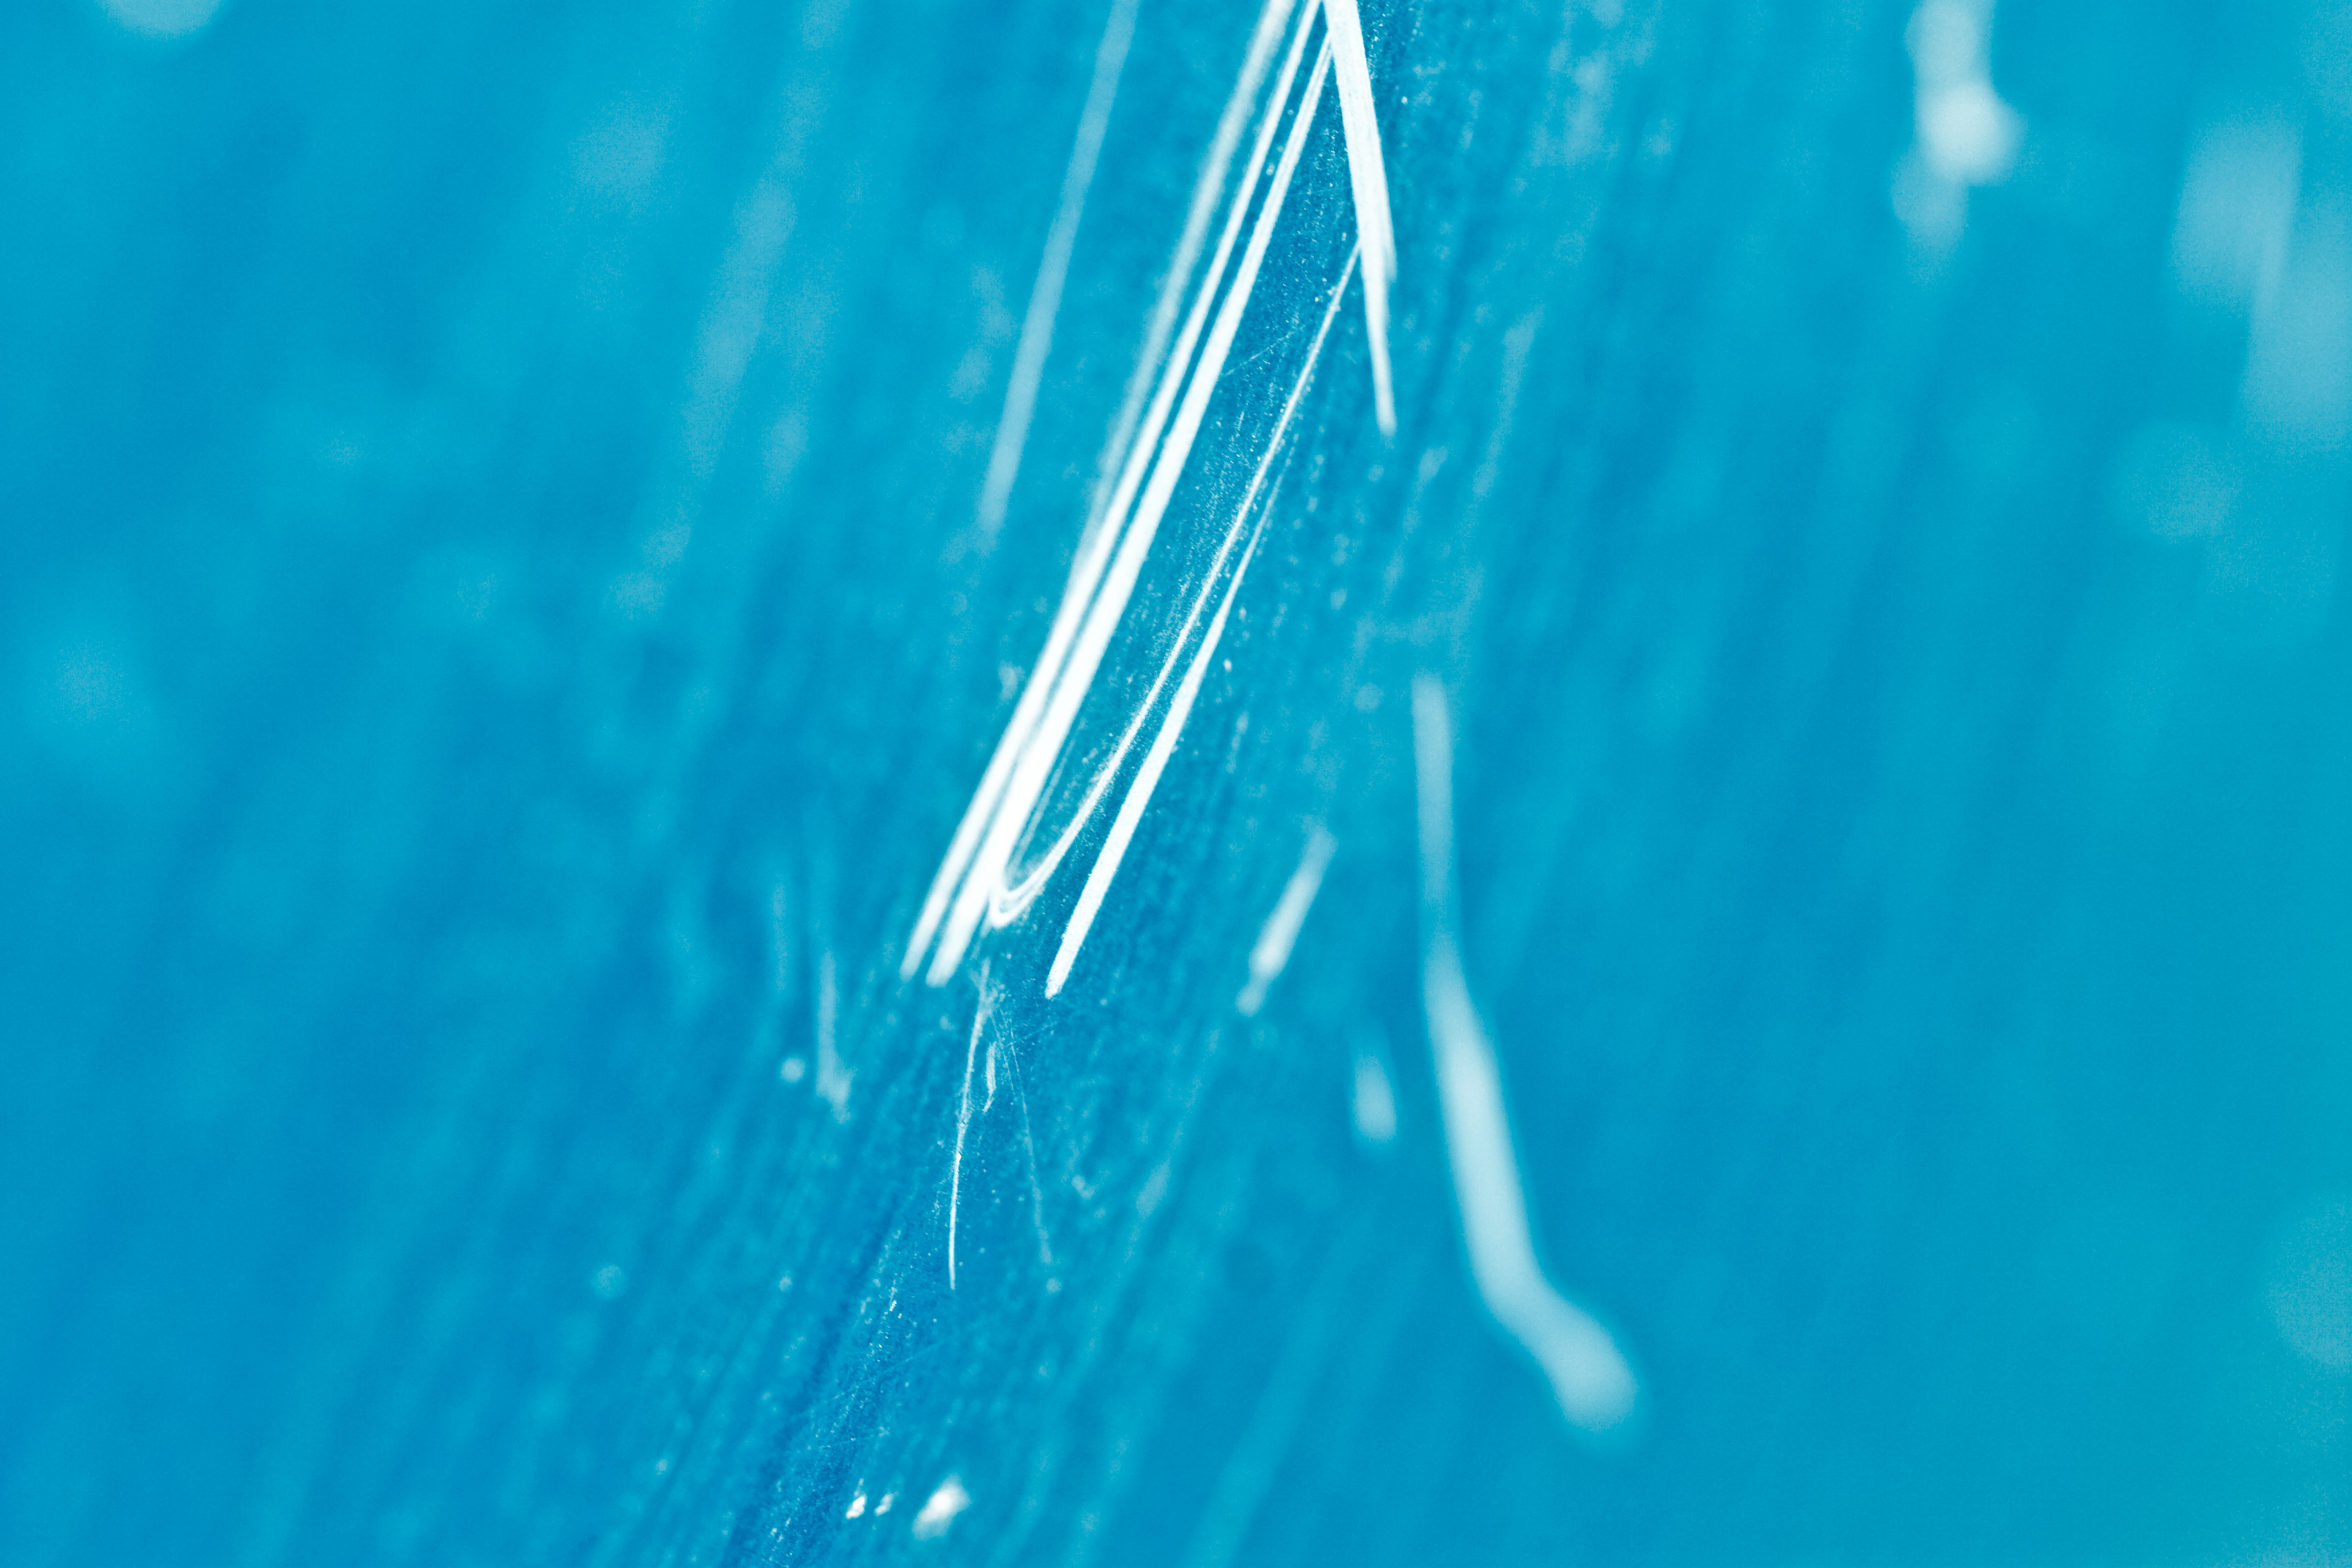 Vivid blue scratched metal texture photo